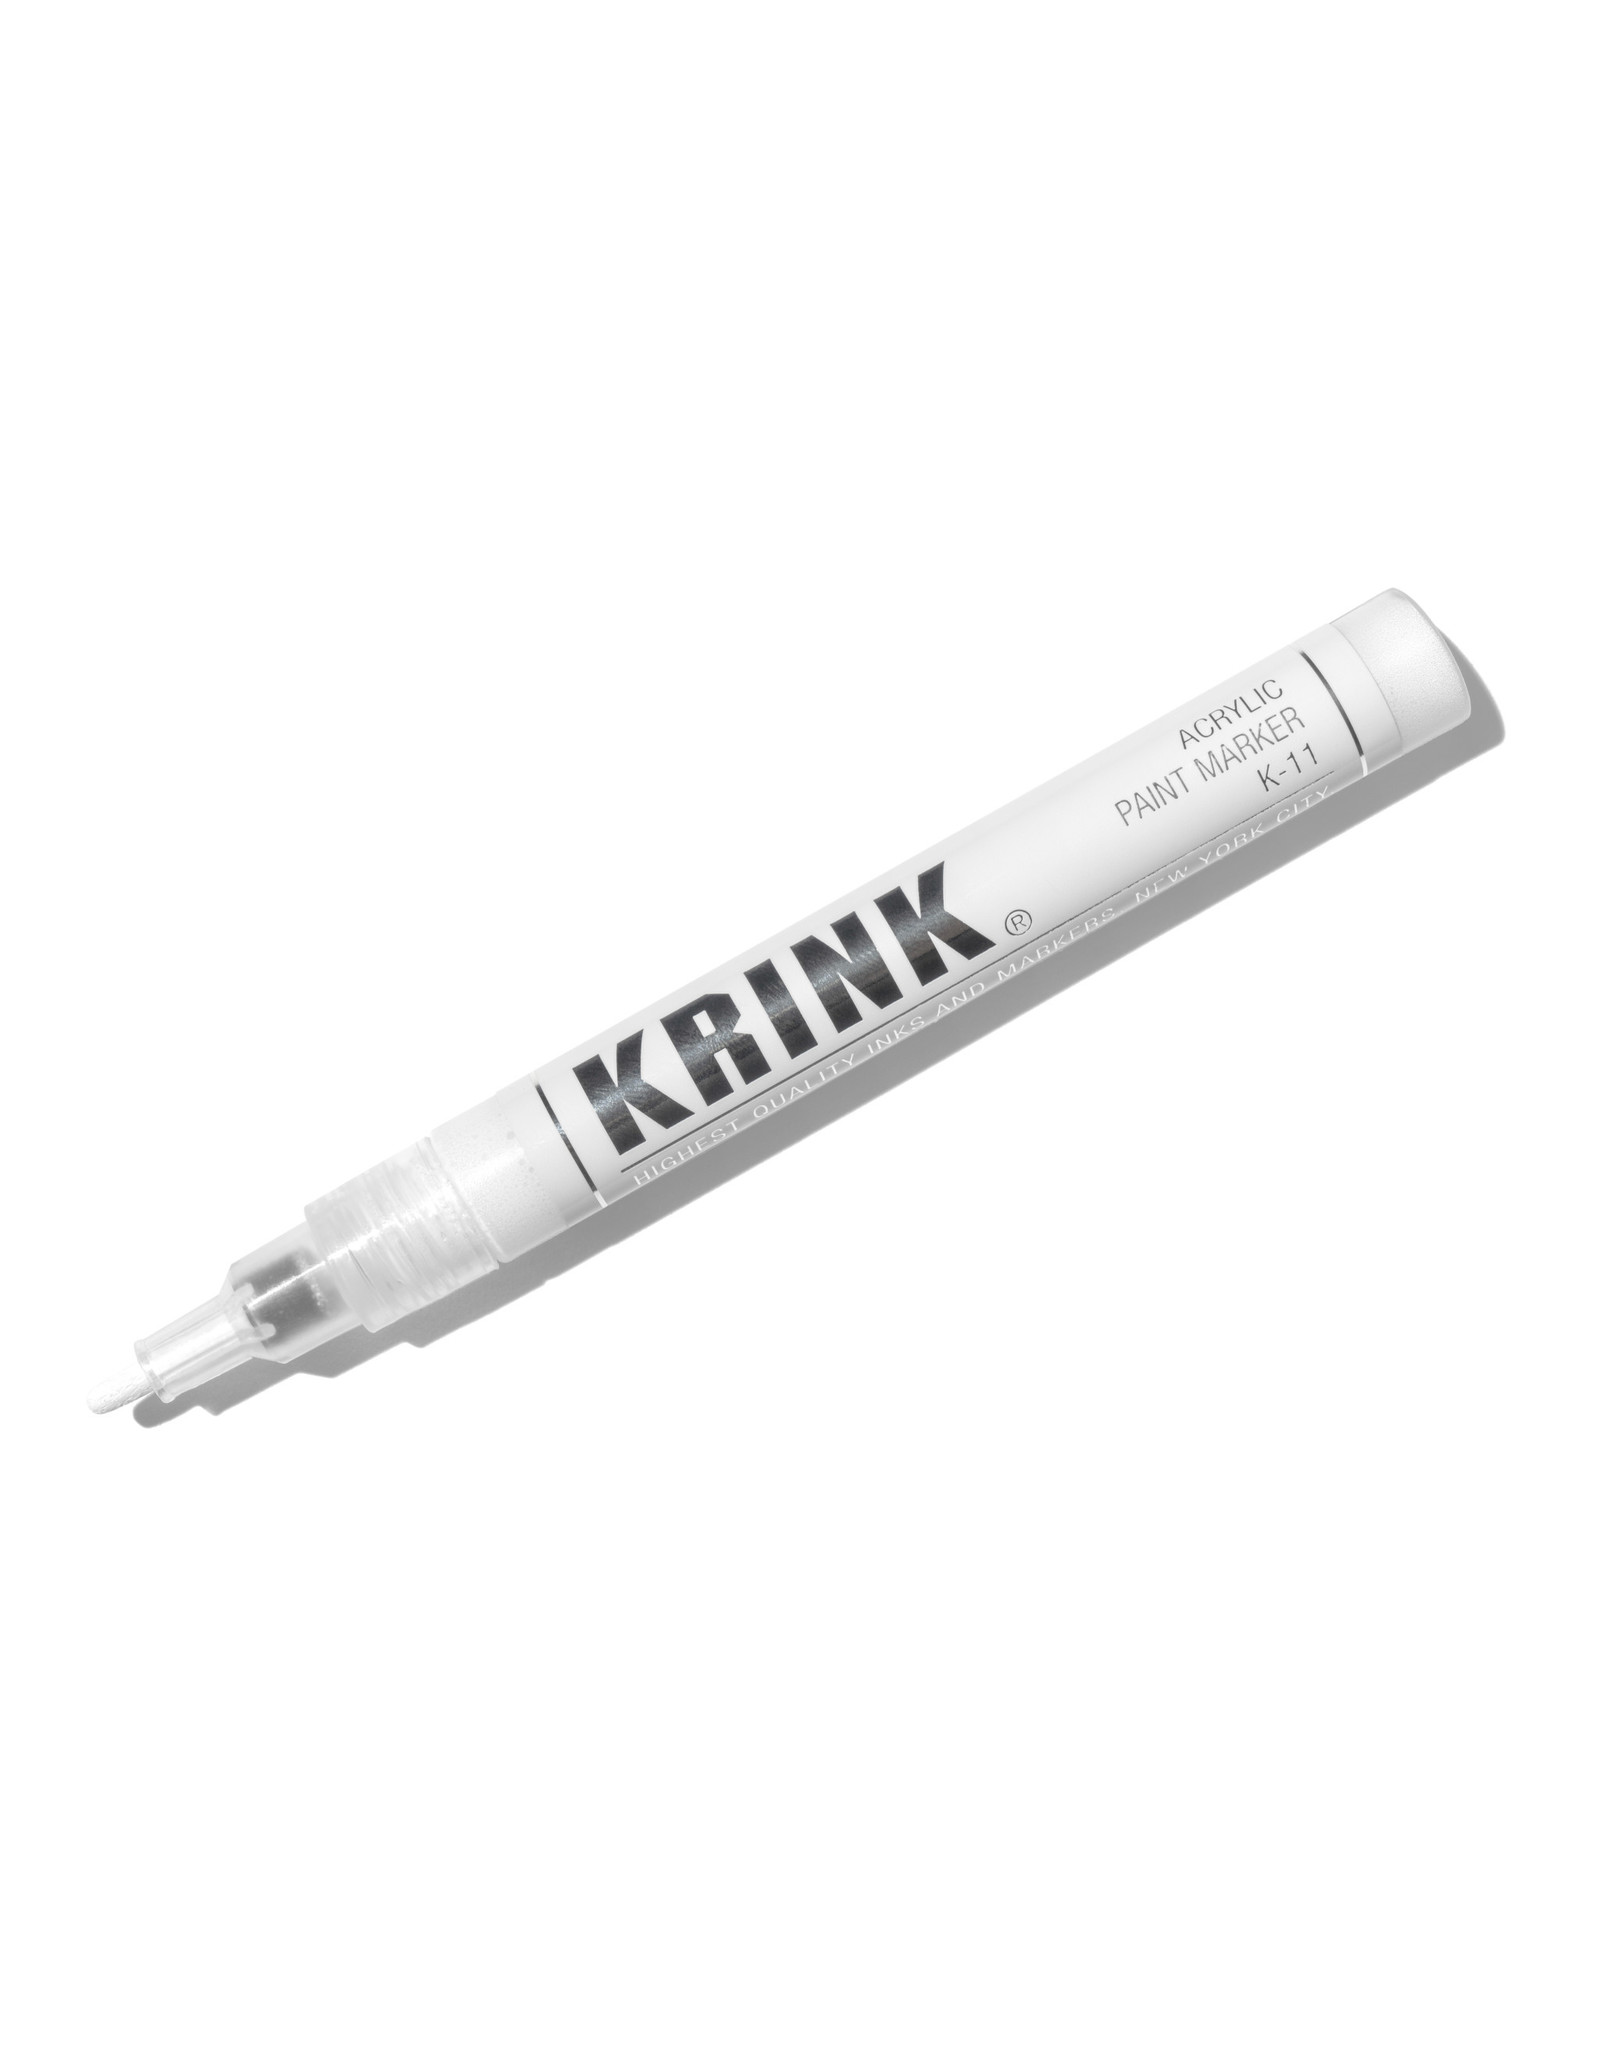 Krink Krink K-11 Acrylic Paint Marker, White